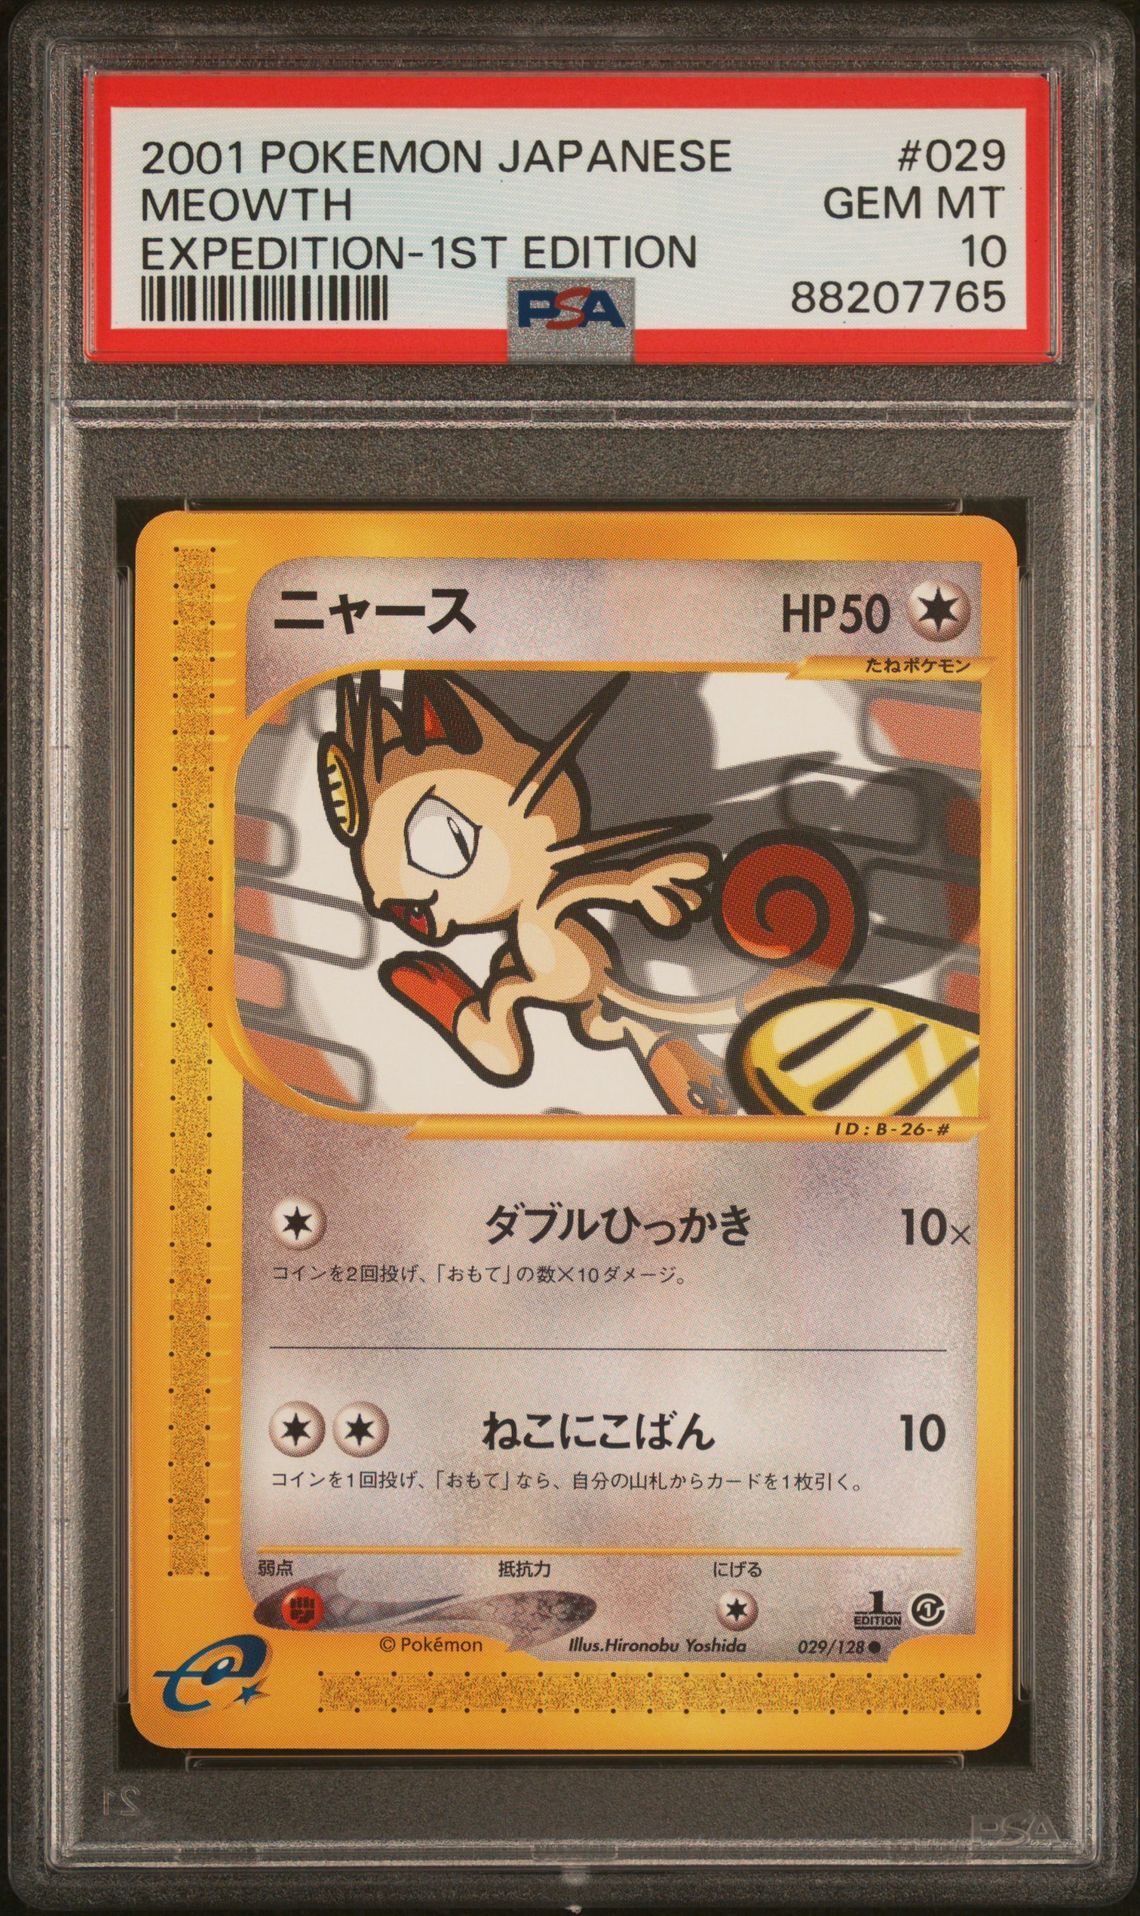 2001 POKEMON JAPANESE EXPEDITION 029 MEOWTH 1ST EDITION - PSA 10 GEM-MT - Pokémon